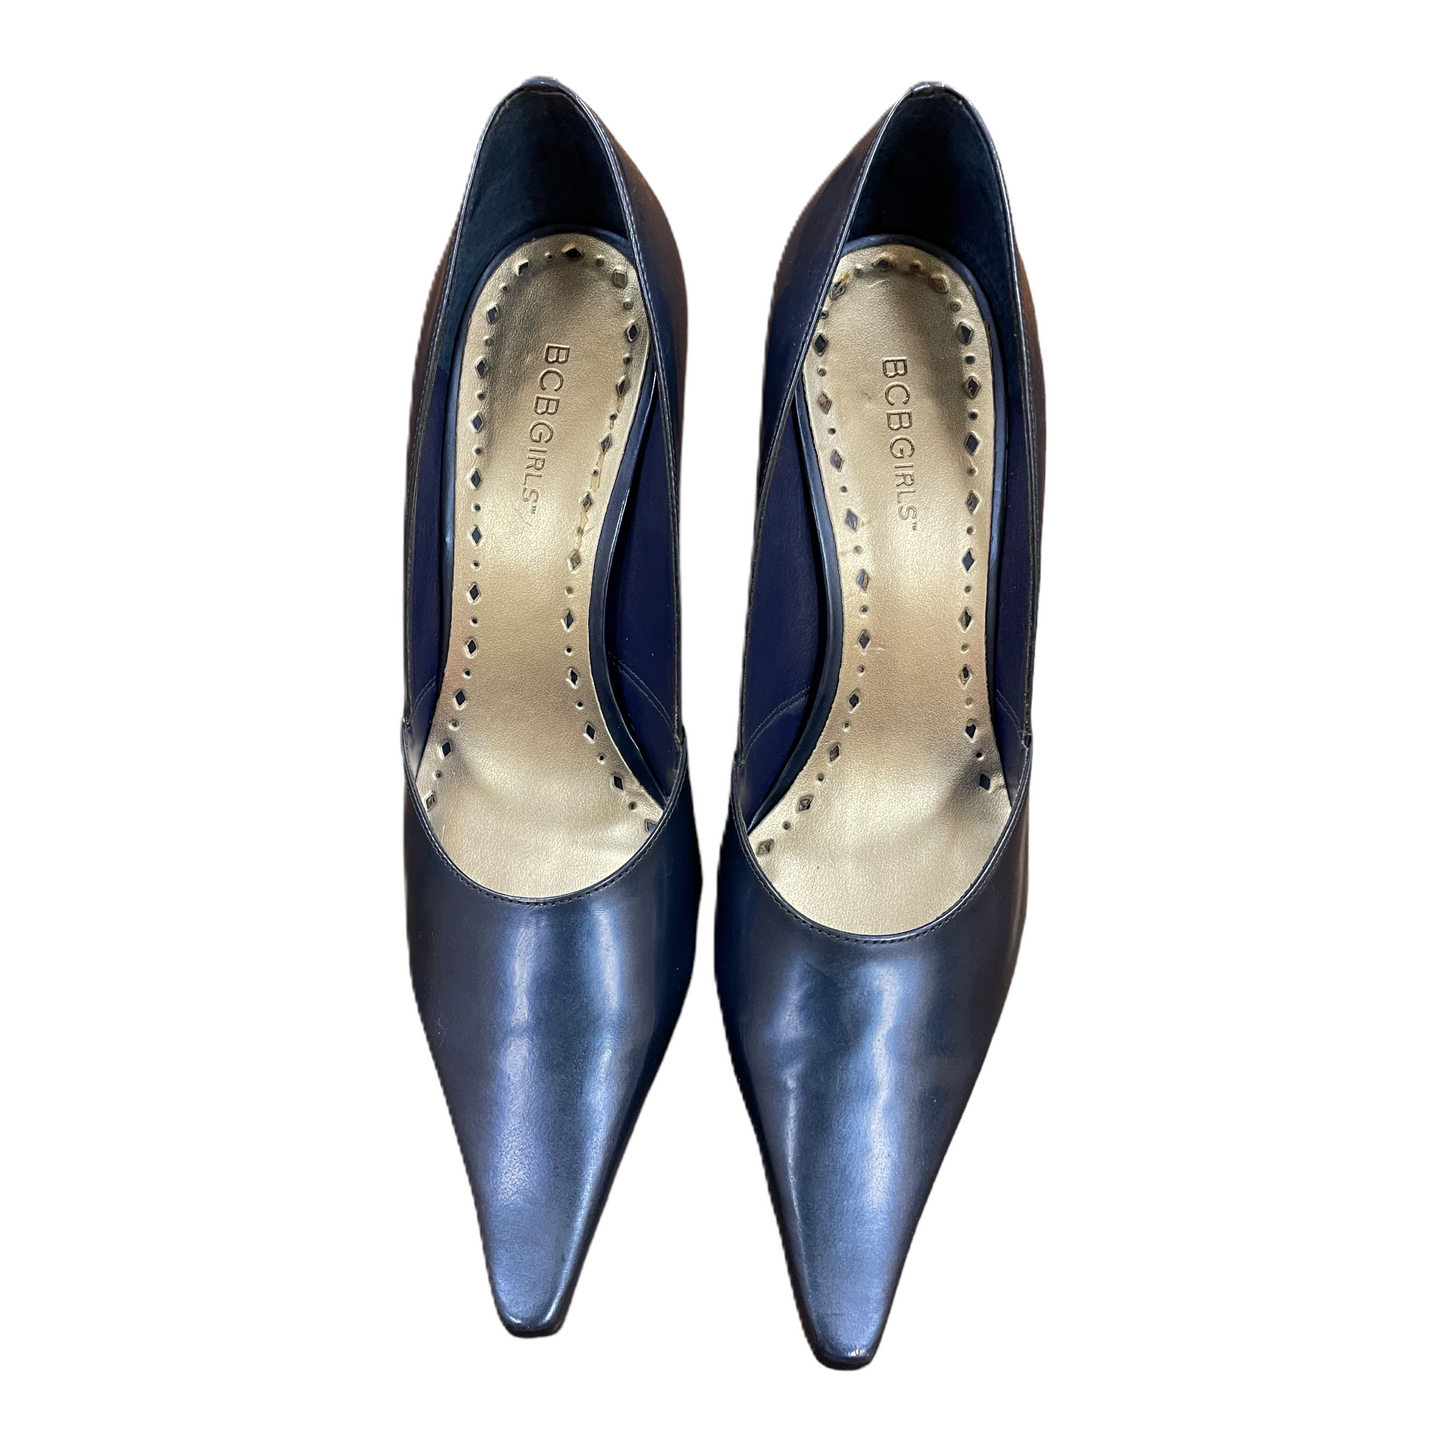 Blue Shoes Heels Stiletto By Bcbg, Size: 10